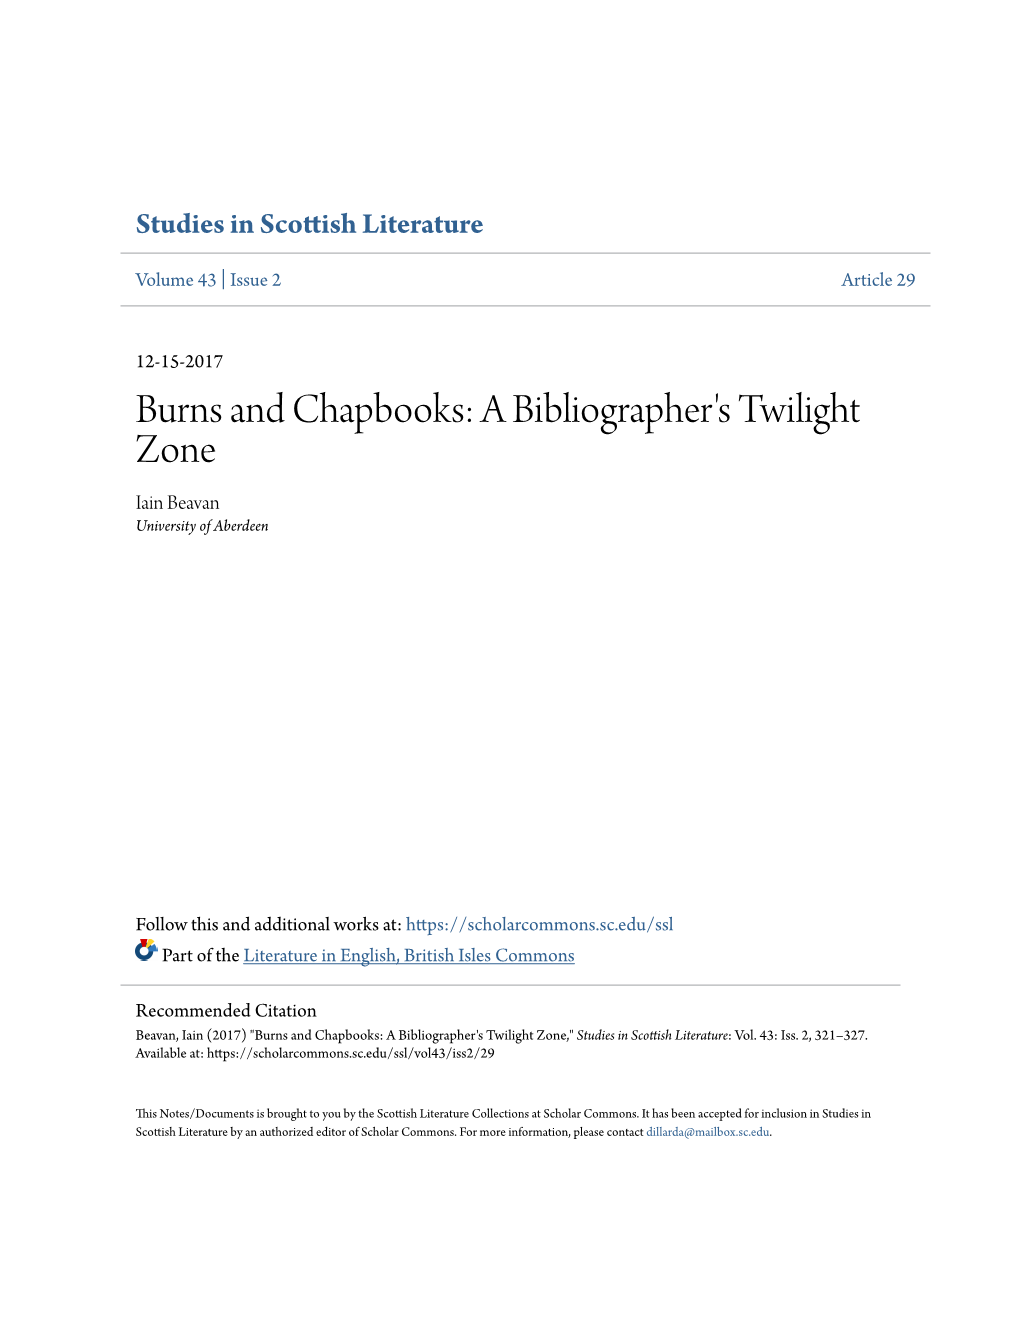 A Bibliographer's Twilight Zone Iain Beavan University of Aberdeen